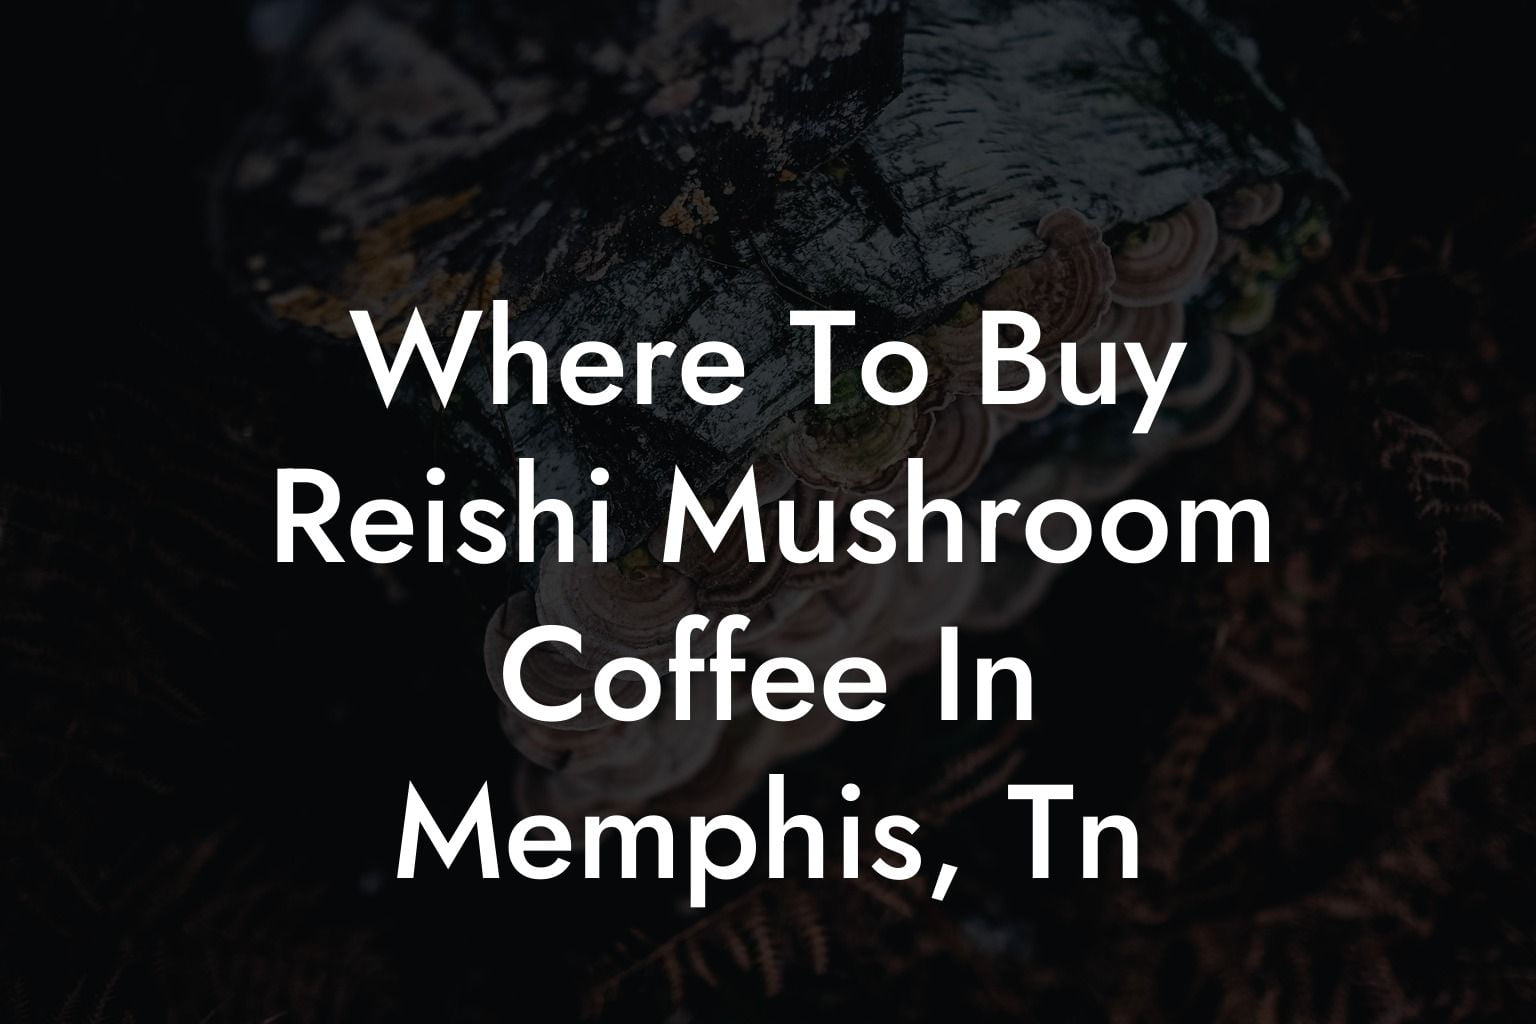 Where To Buy Reishi Mushroom Coffee In Memphis, Tn